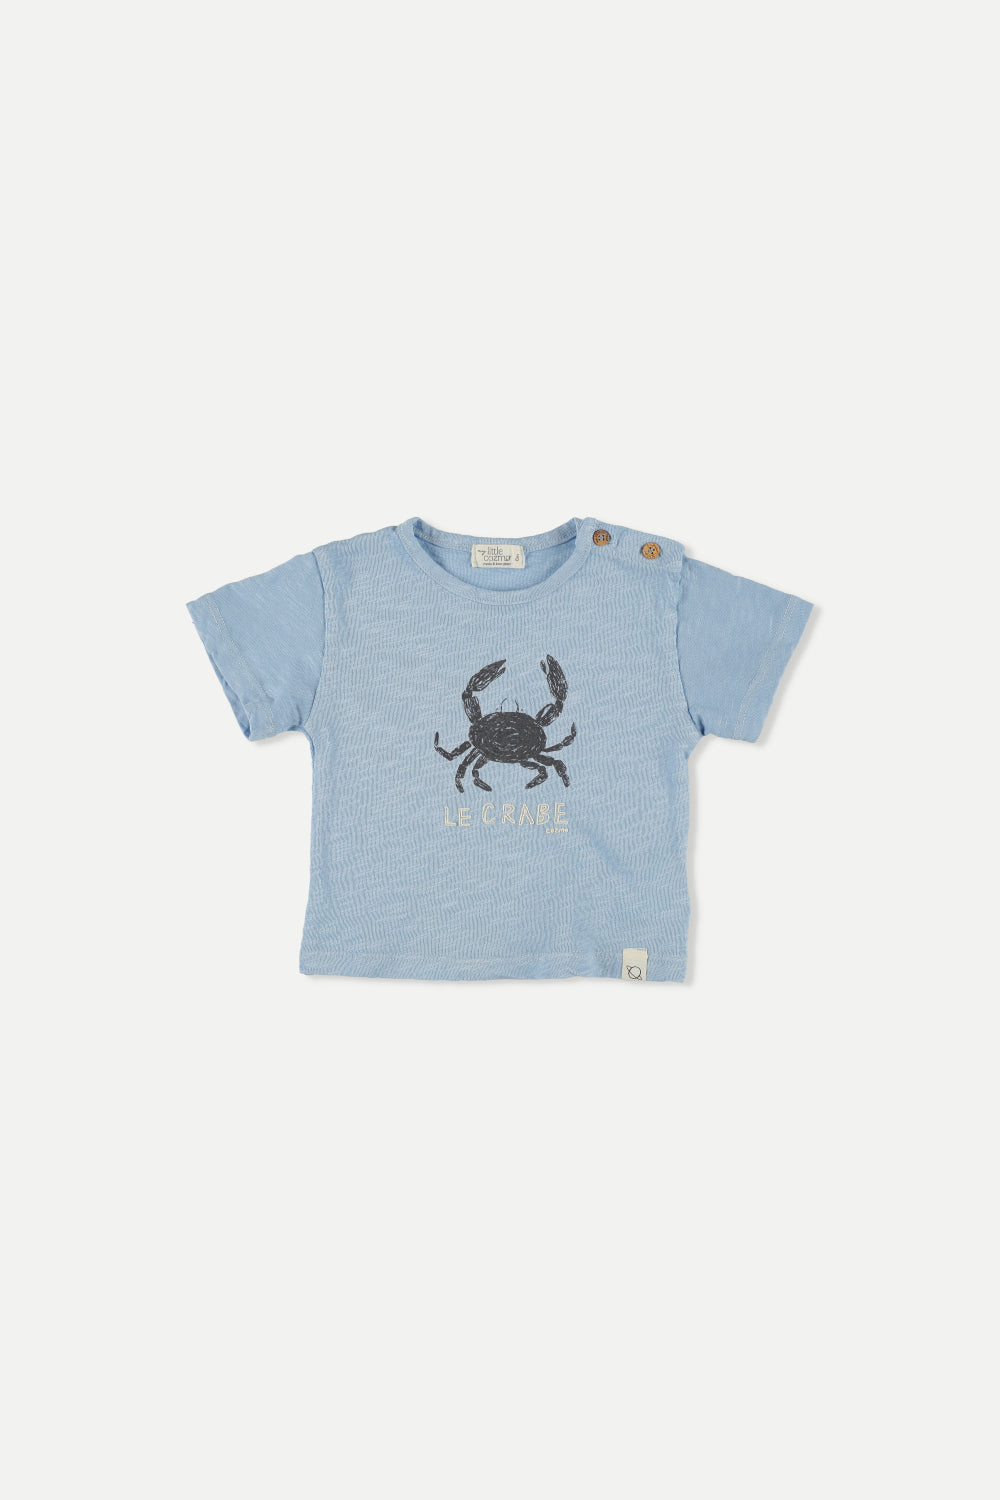 T-Shirt Baby Boy Maxim Blue - ملابس